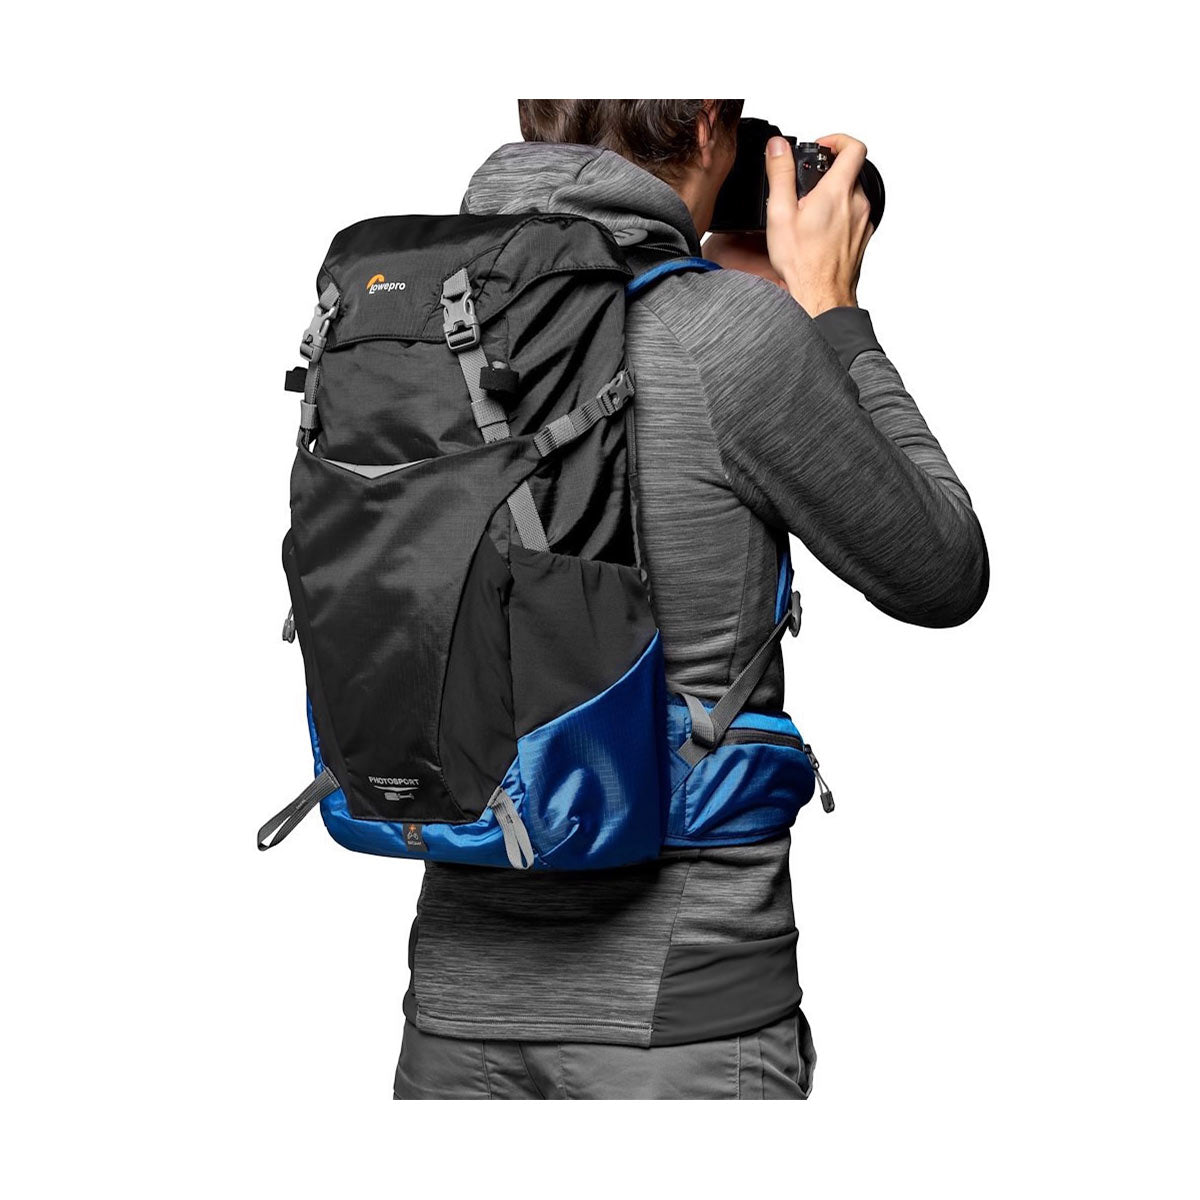 Lowepro PhotoSport Backpack BP 24L AW III (Black/Blue)